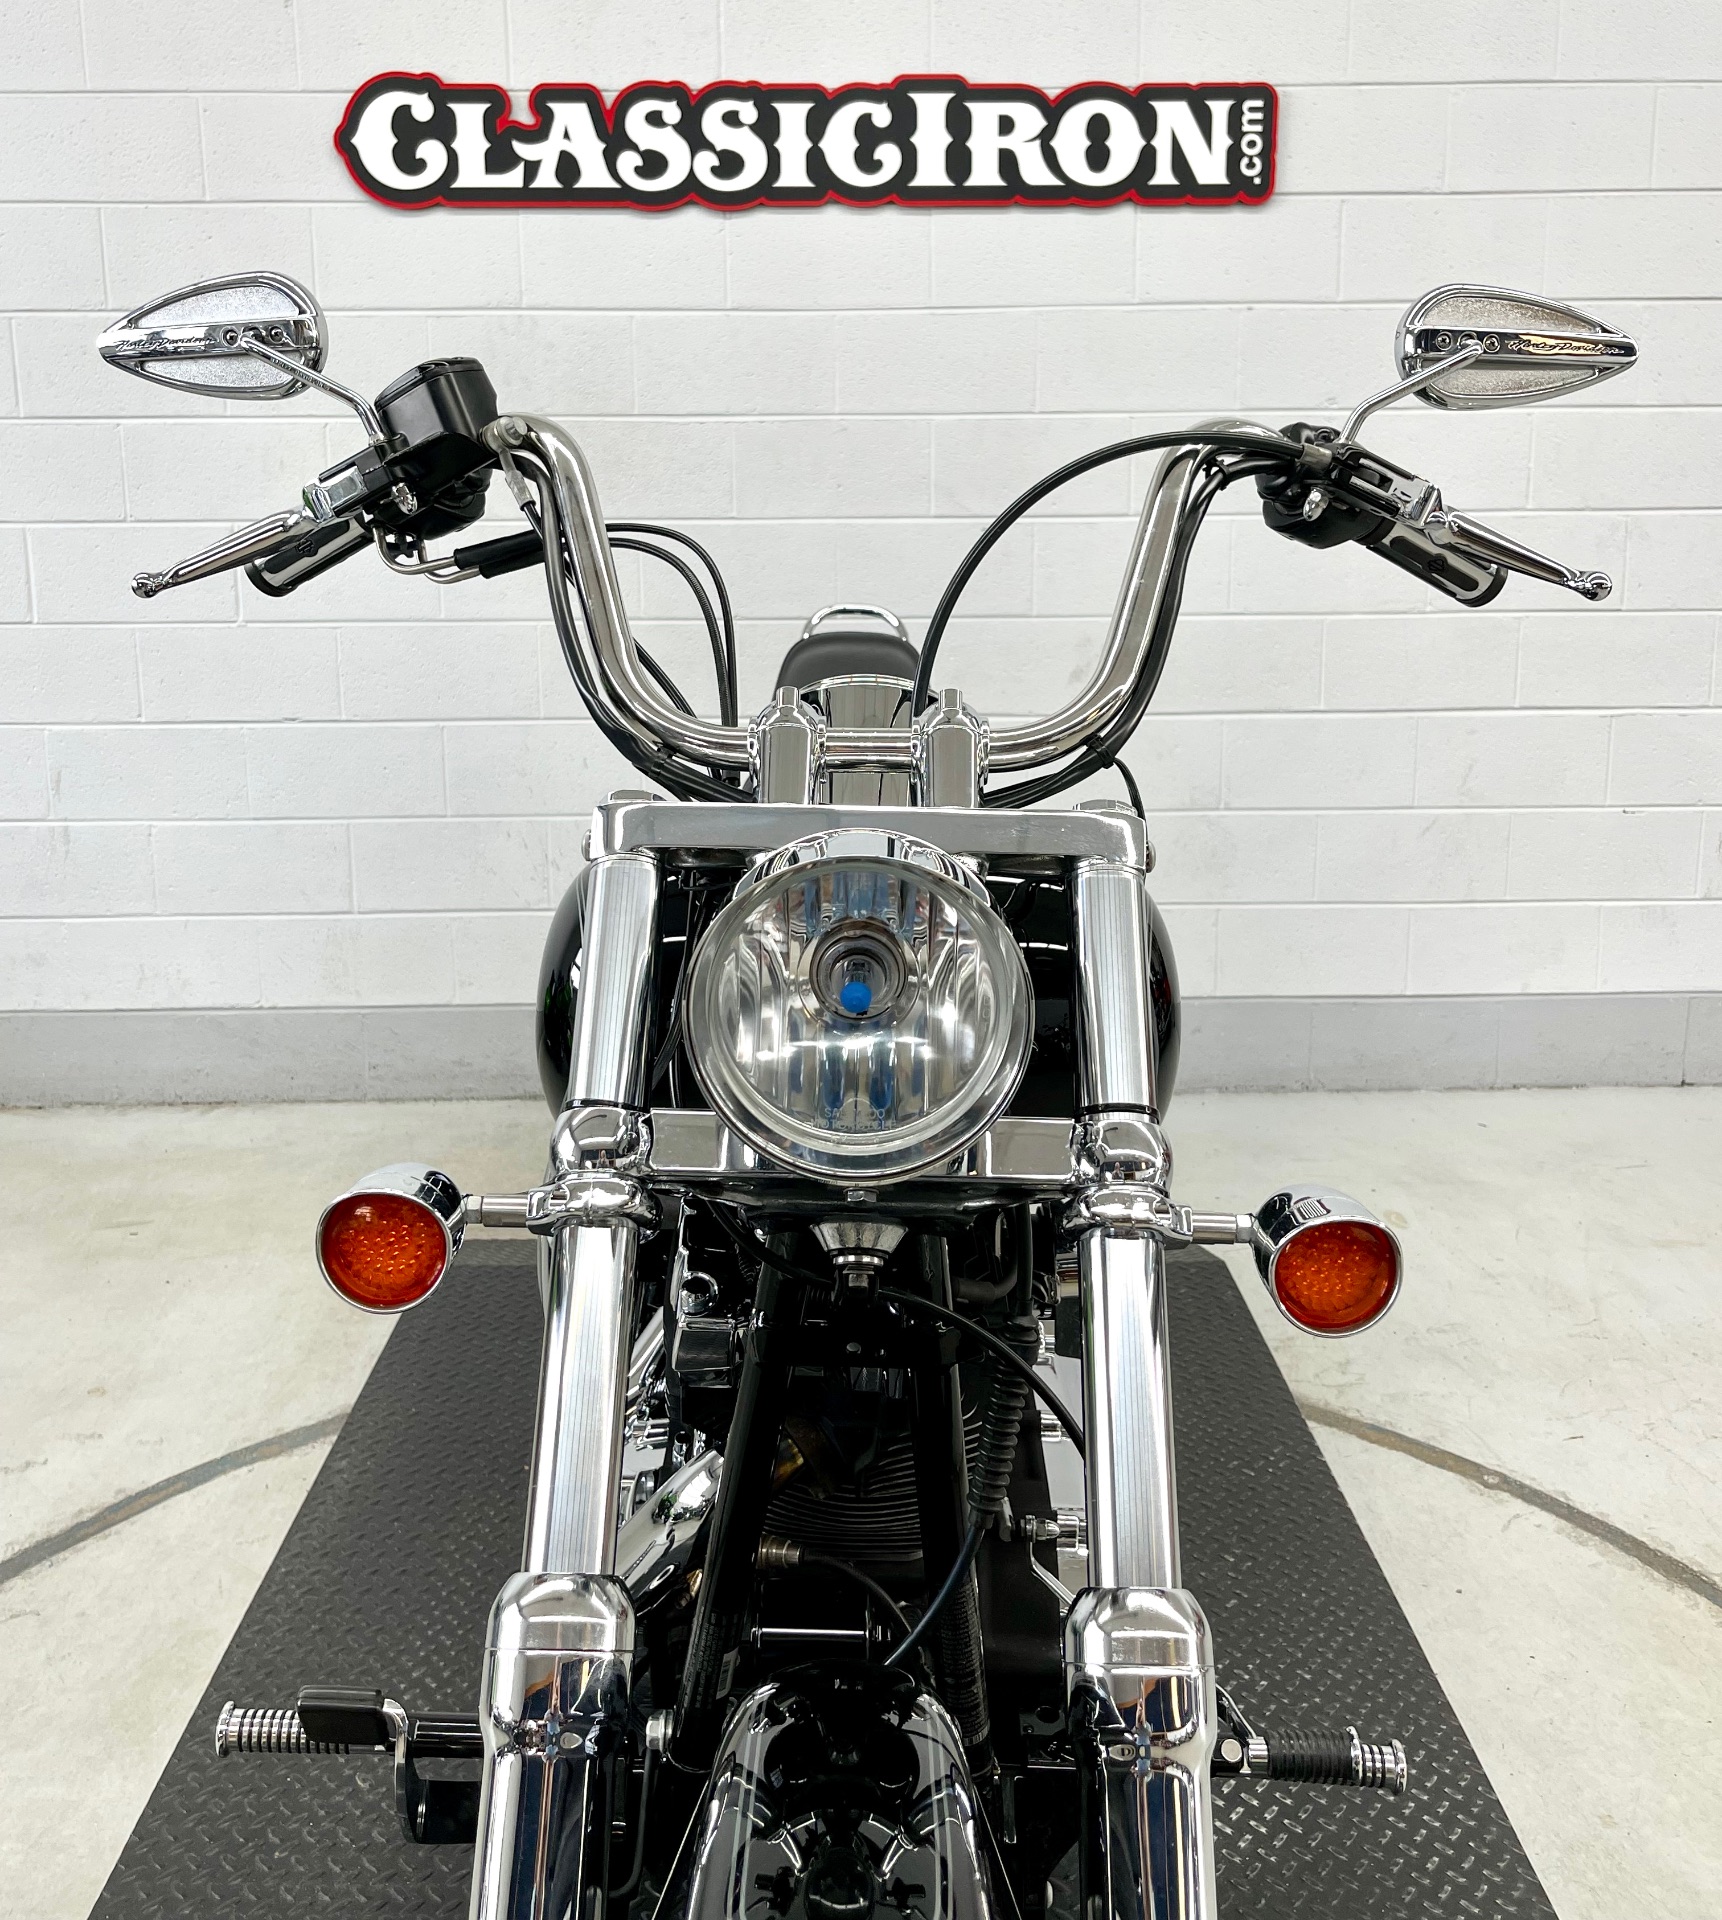 2008 Harley-Davidson Softail Custom in Fredericksburg, Virginia - Photo 8